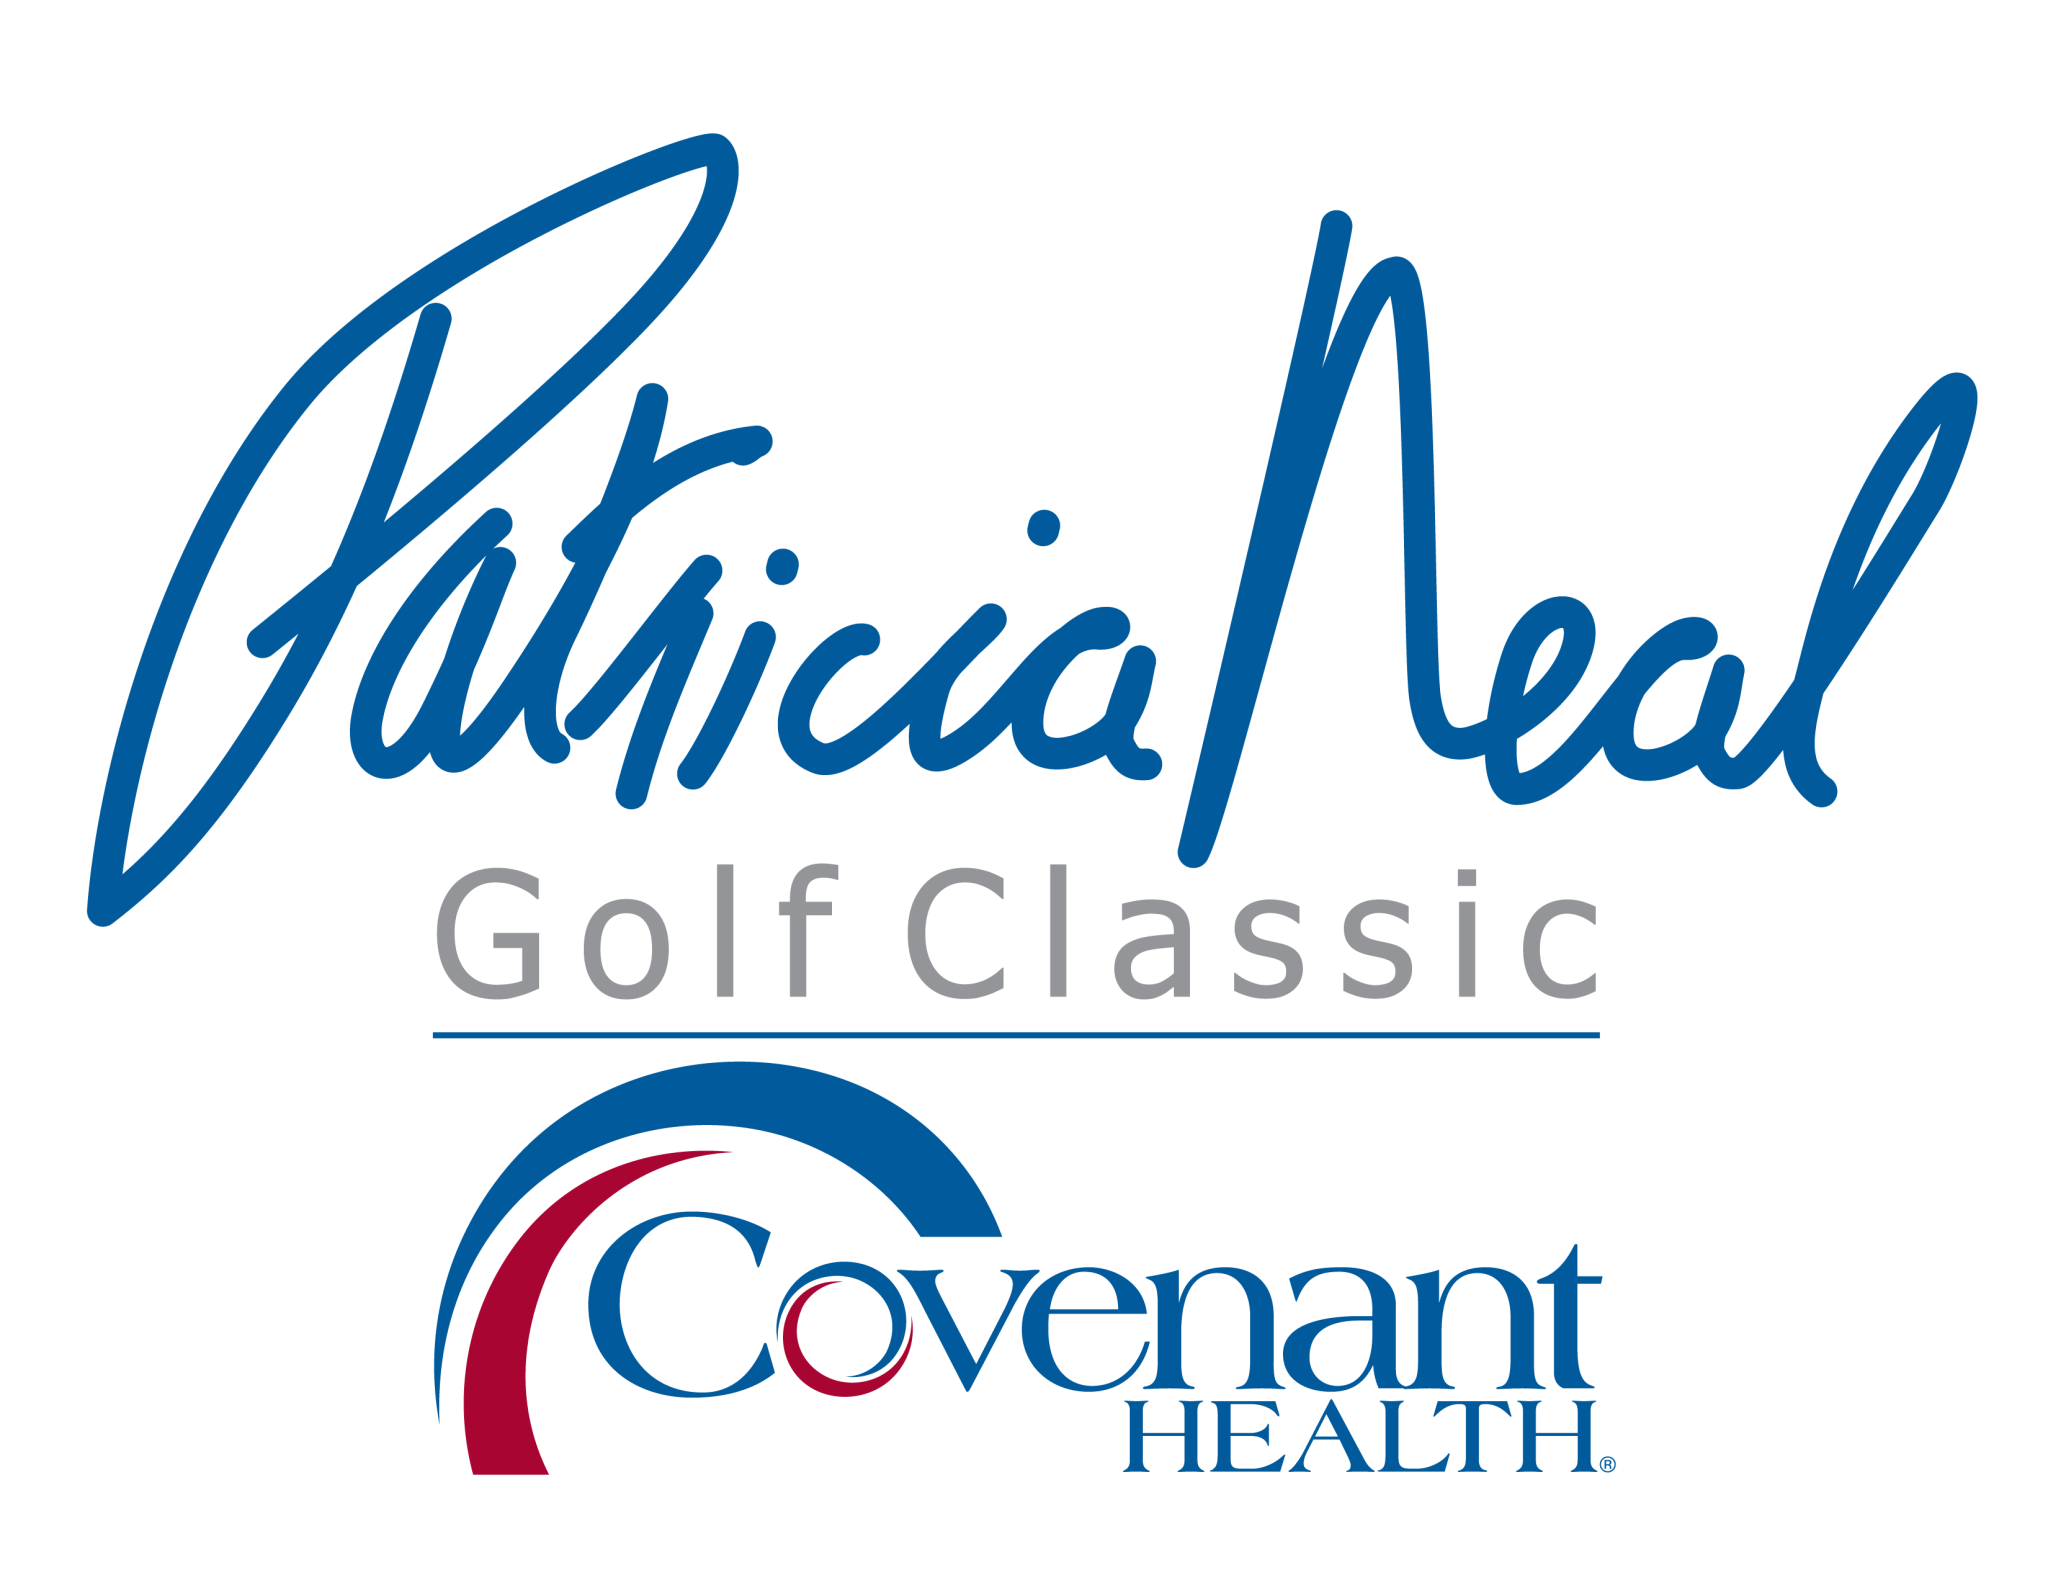 Patricia Neal Golf Classic